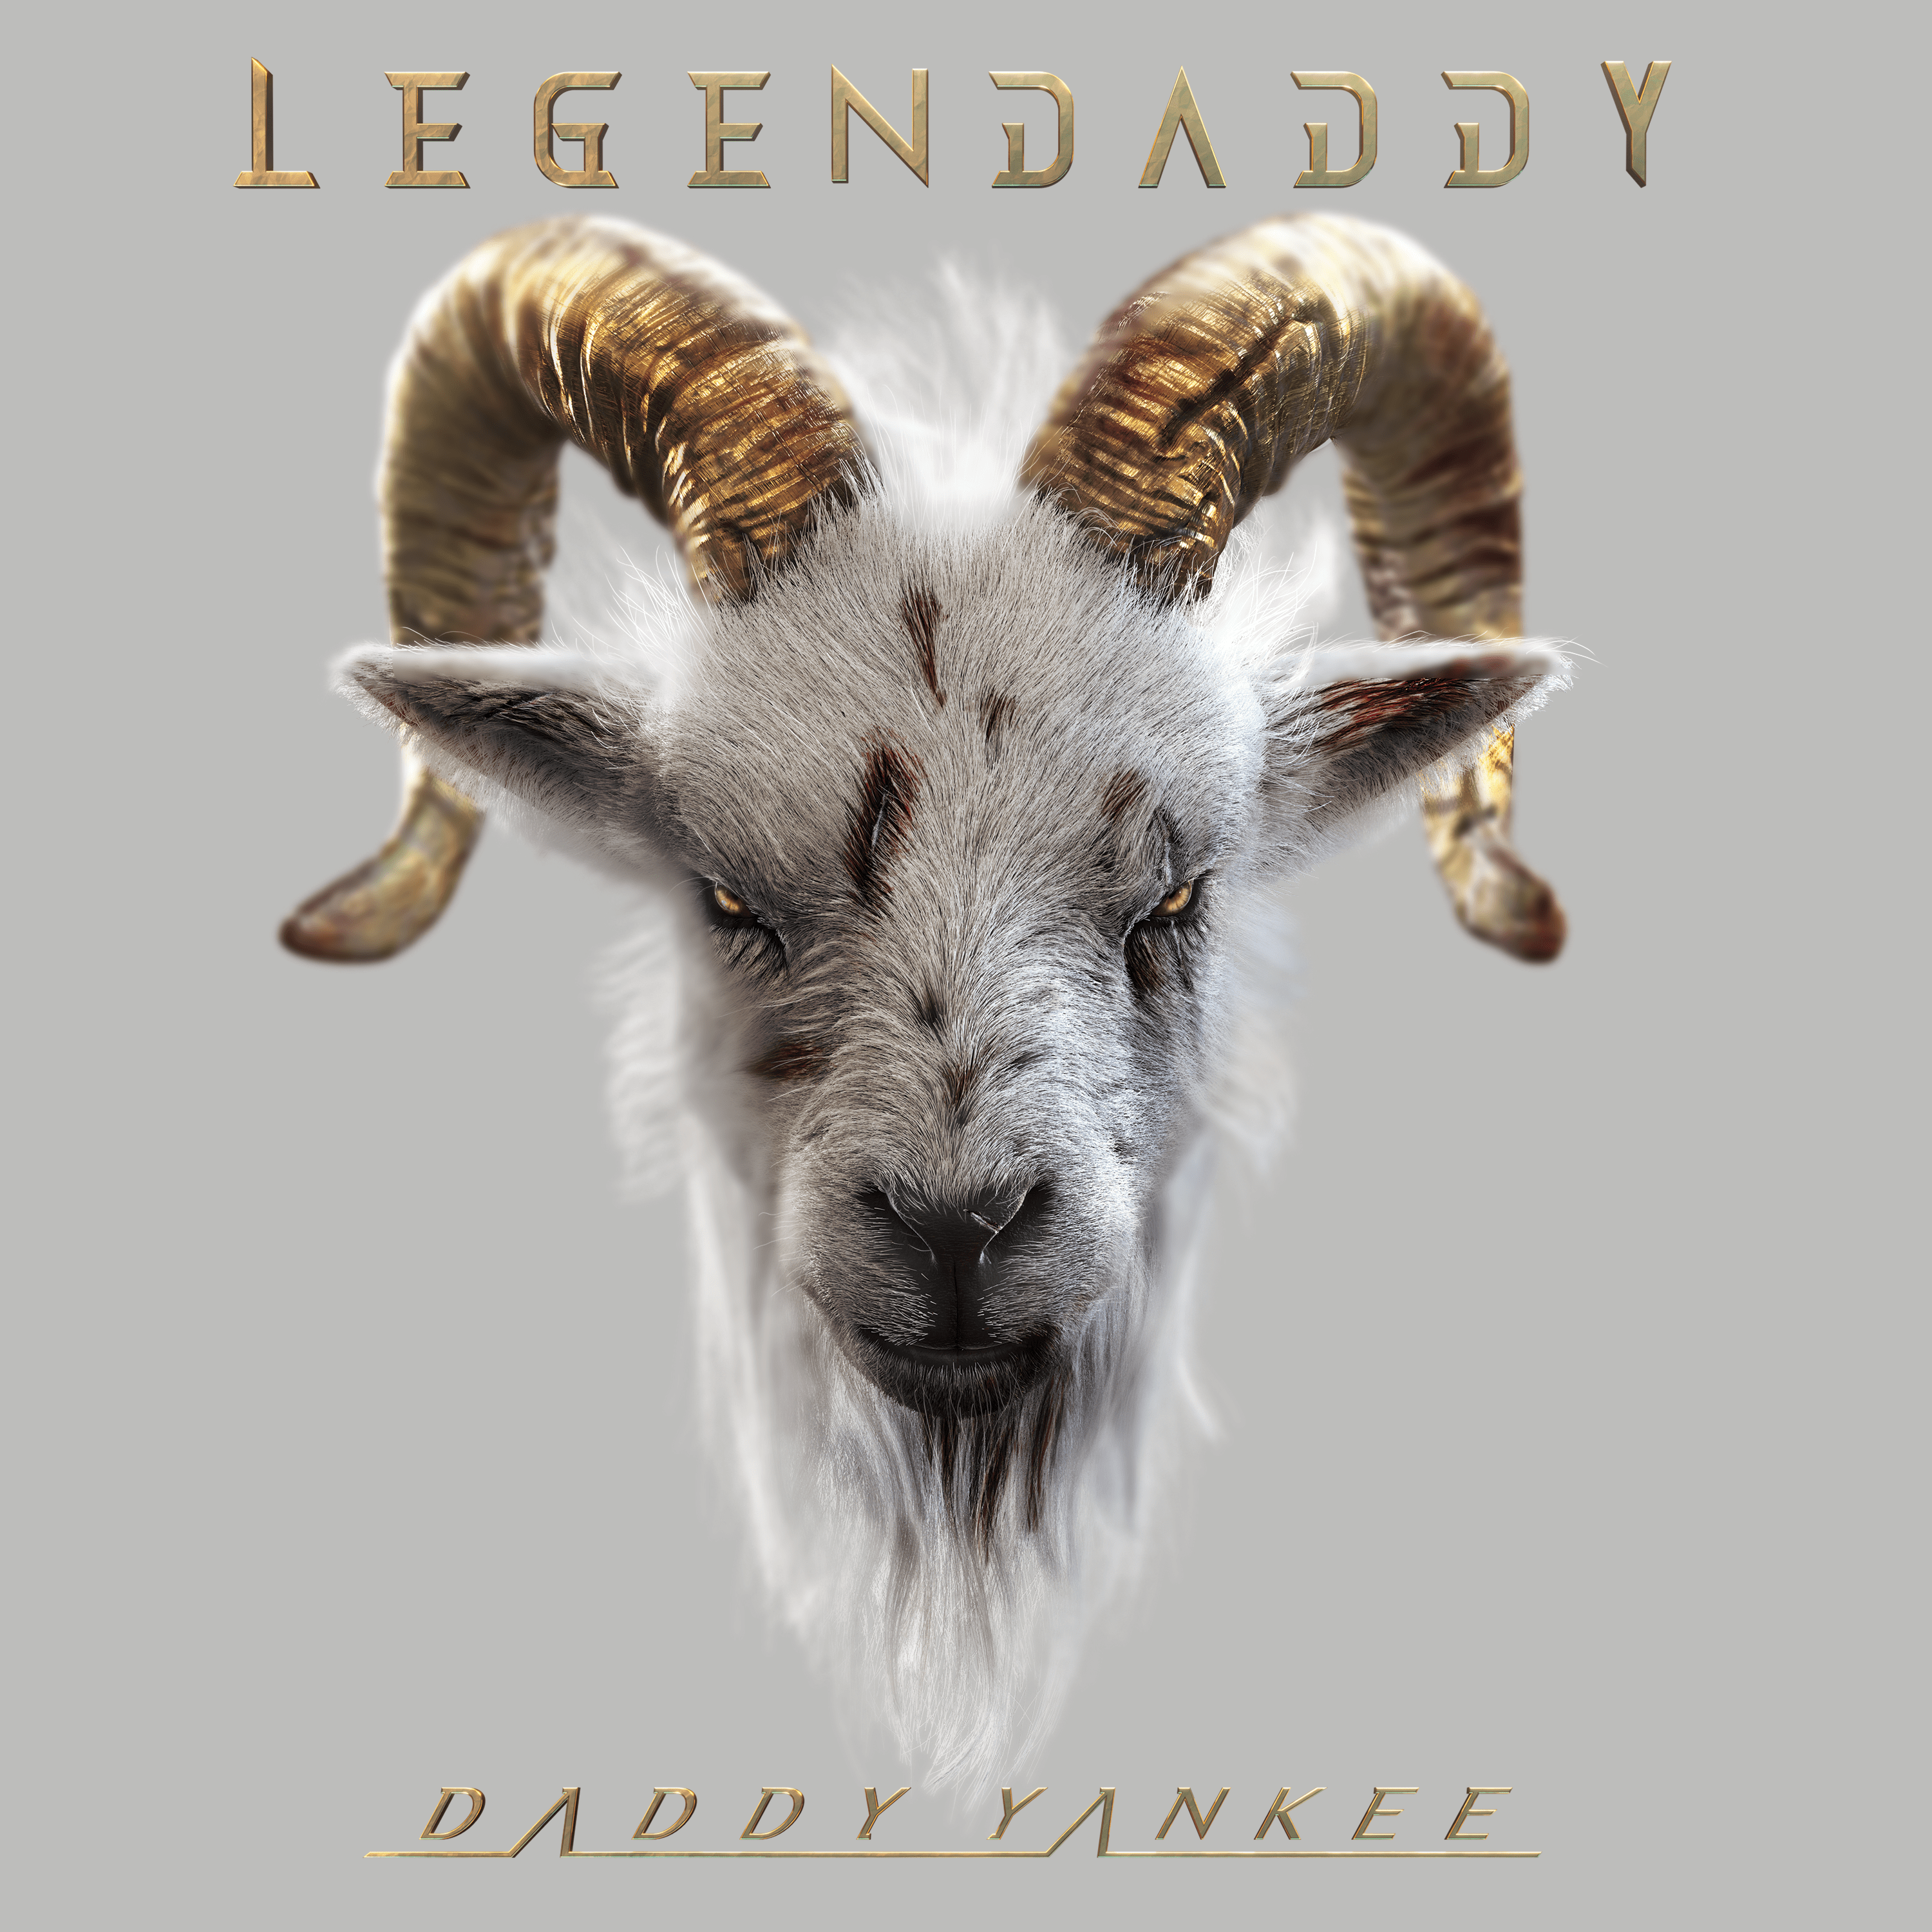 Daddy Yankee Legendaddy via Republic Records for use by 360 Magazine